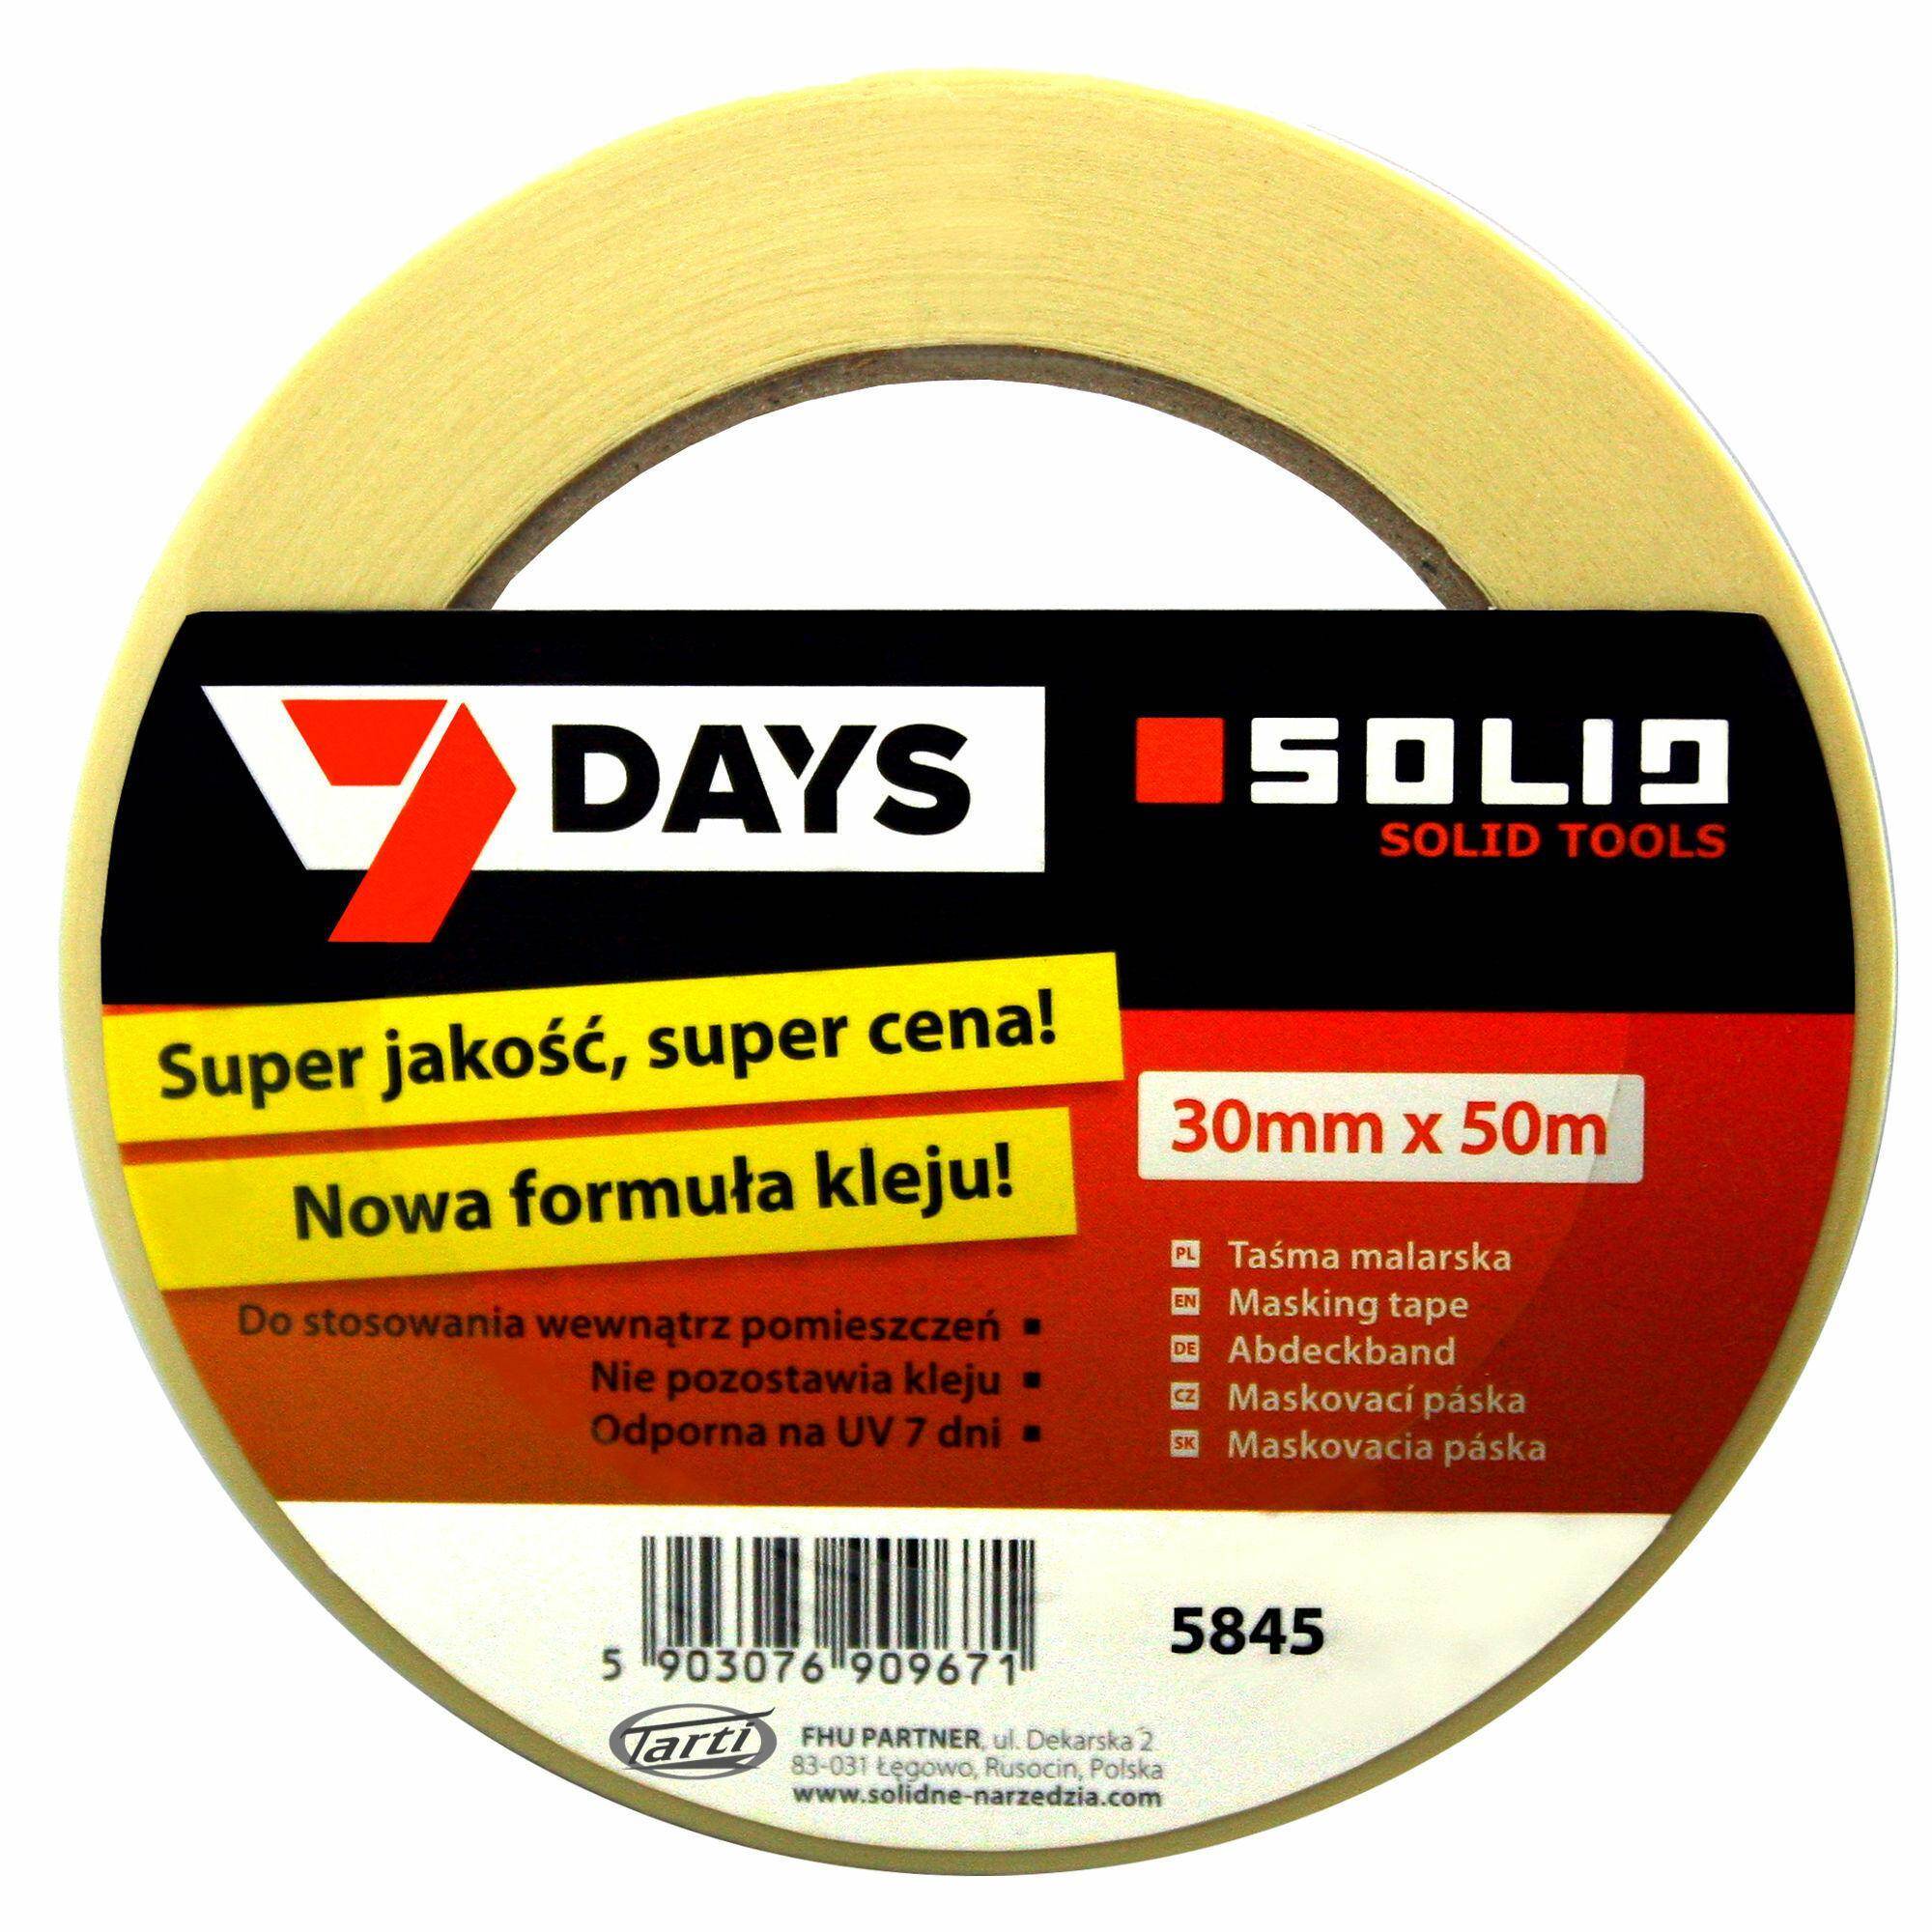 SOLID 5845 taśma malarska 30x50m 7 DAYS